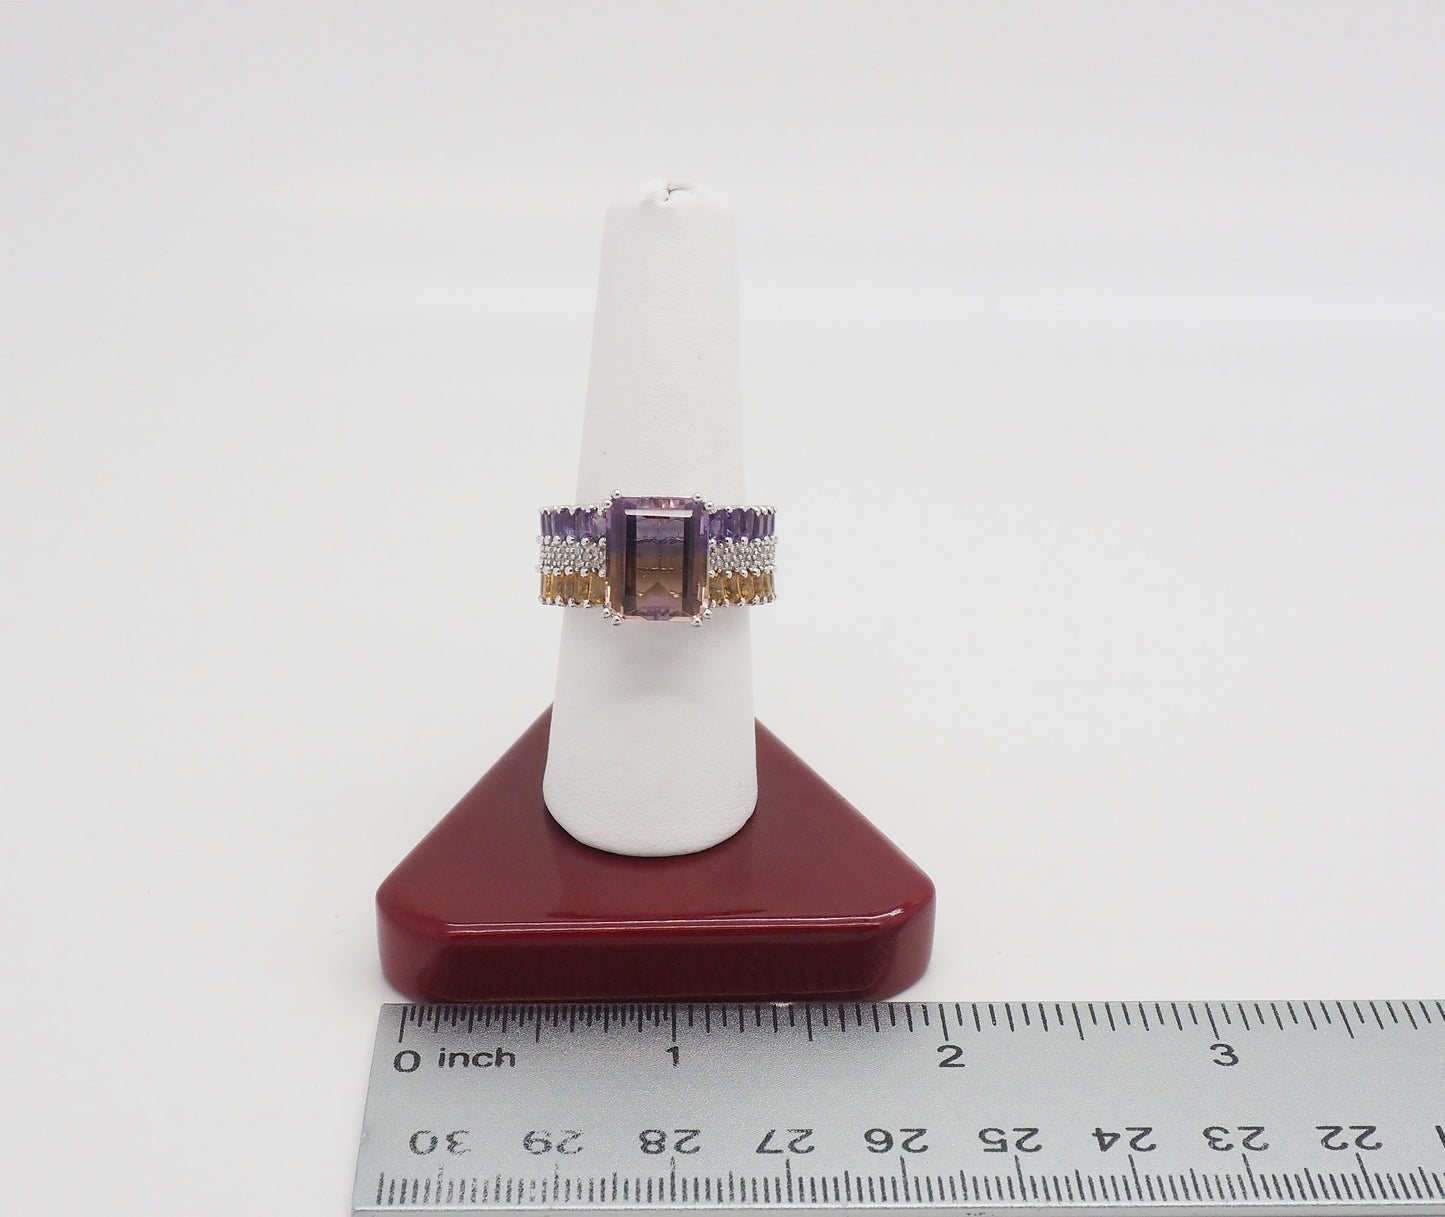 10k White Gold Bicolor Ametrine Ring, Size 8 - 7.1g